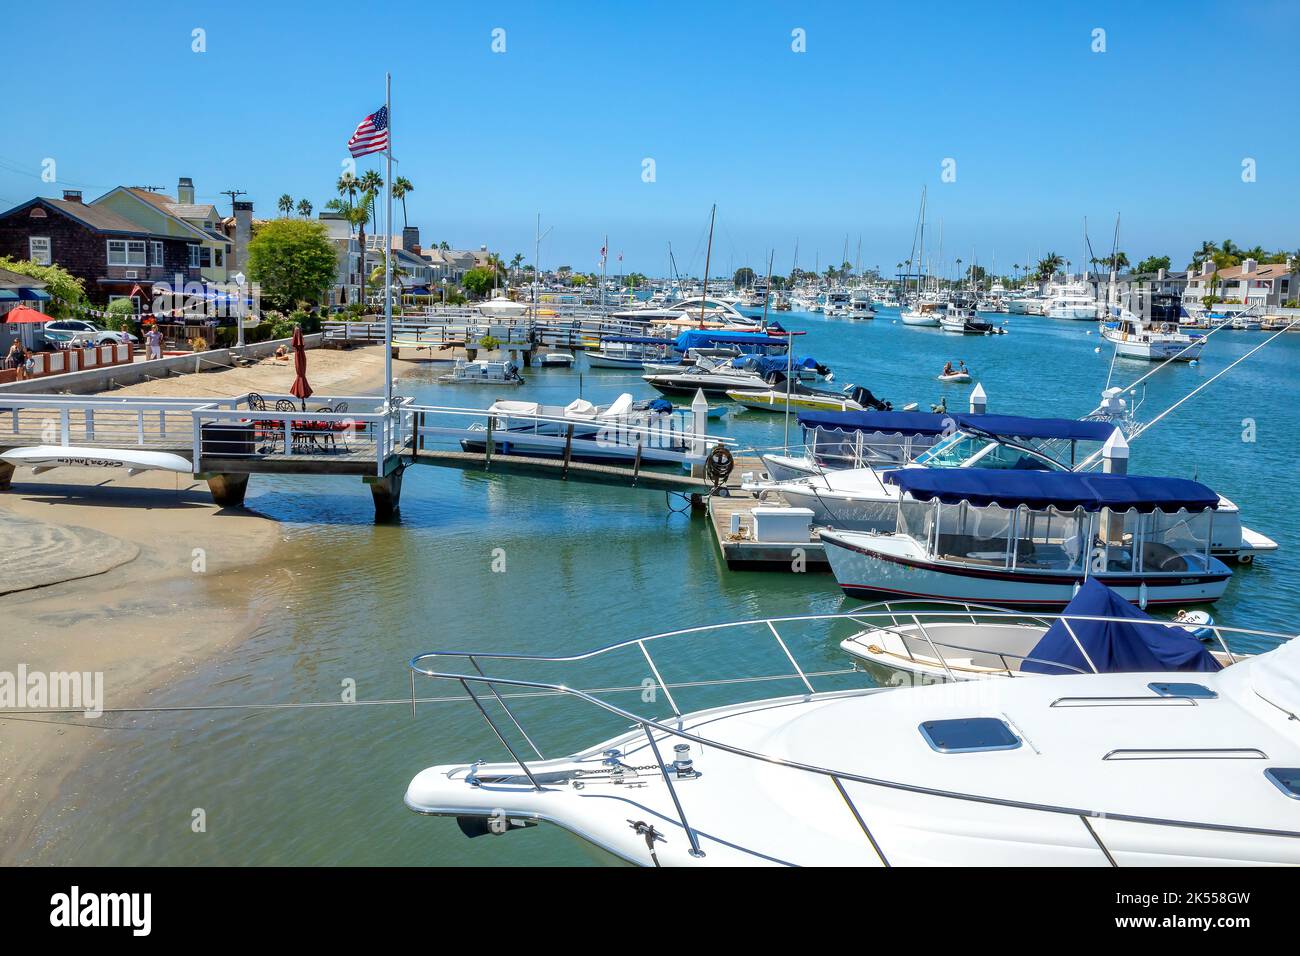 View of Balboa Island in Newport Beach, California Stock Photo